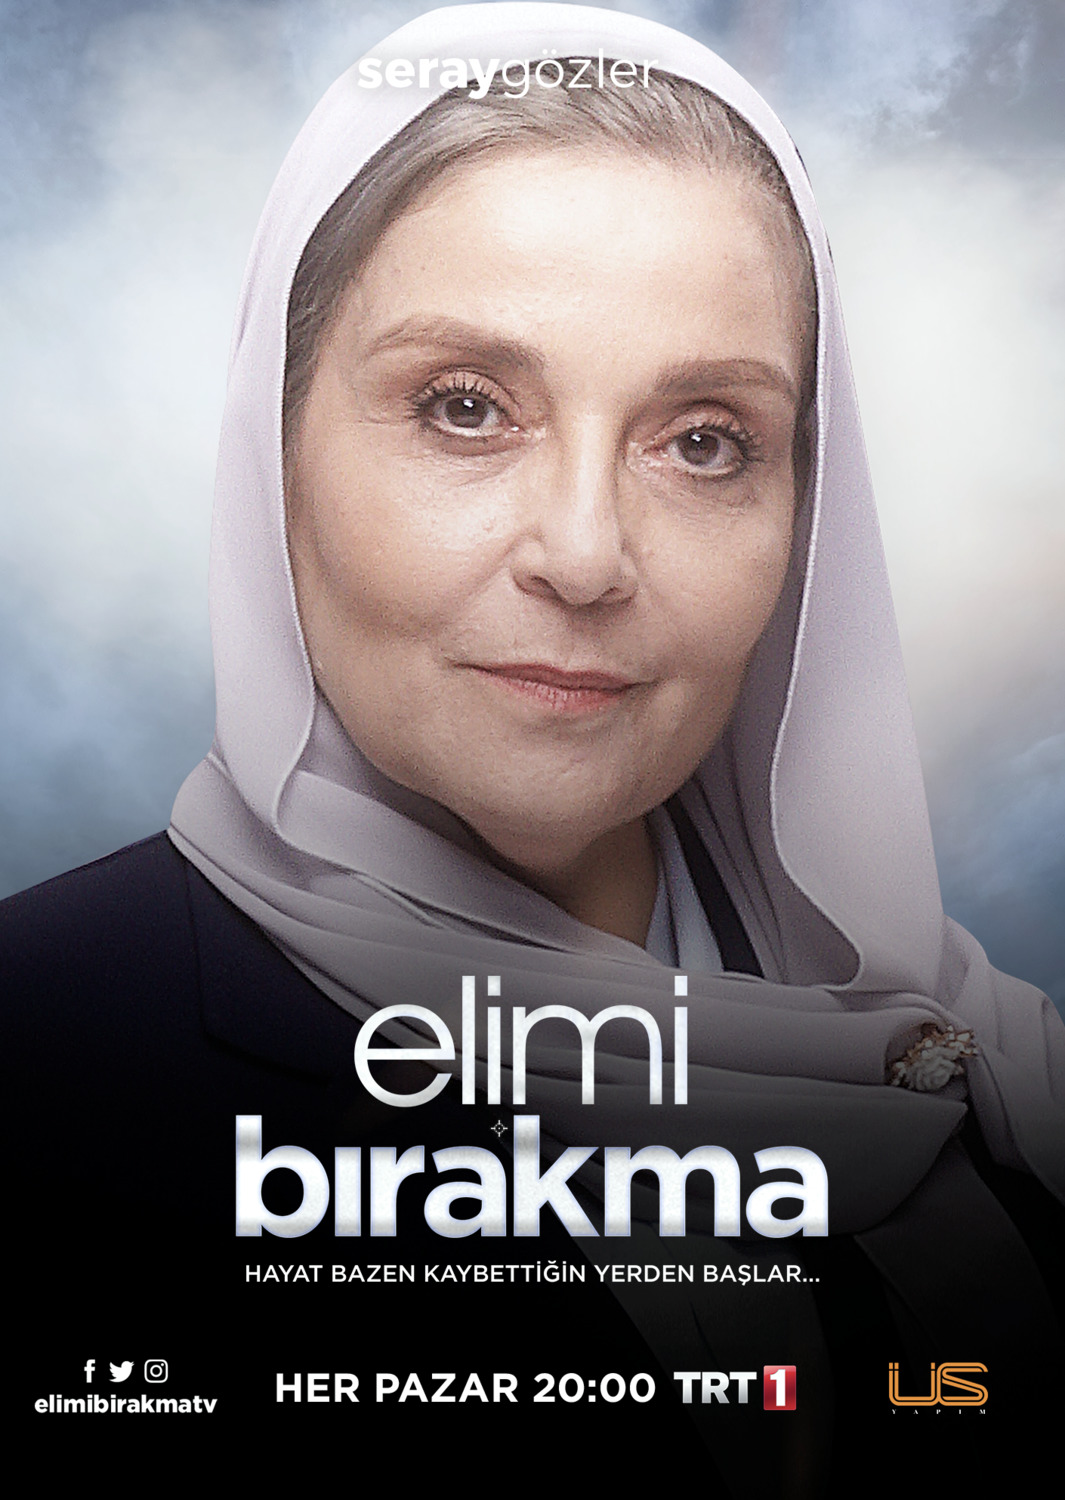 Extra Large TV Poster Image for Elimi birakma (#10 of 20)